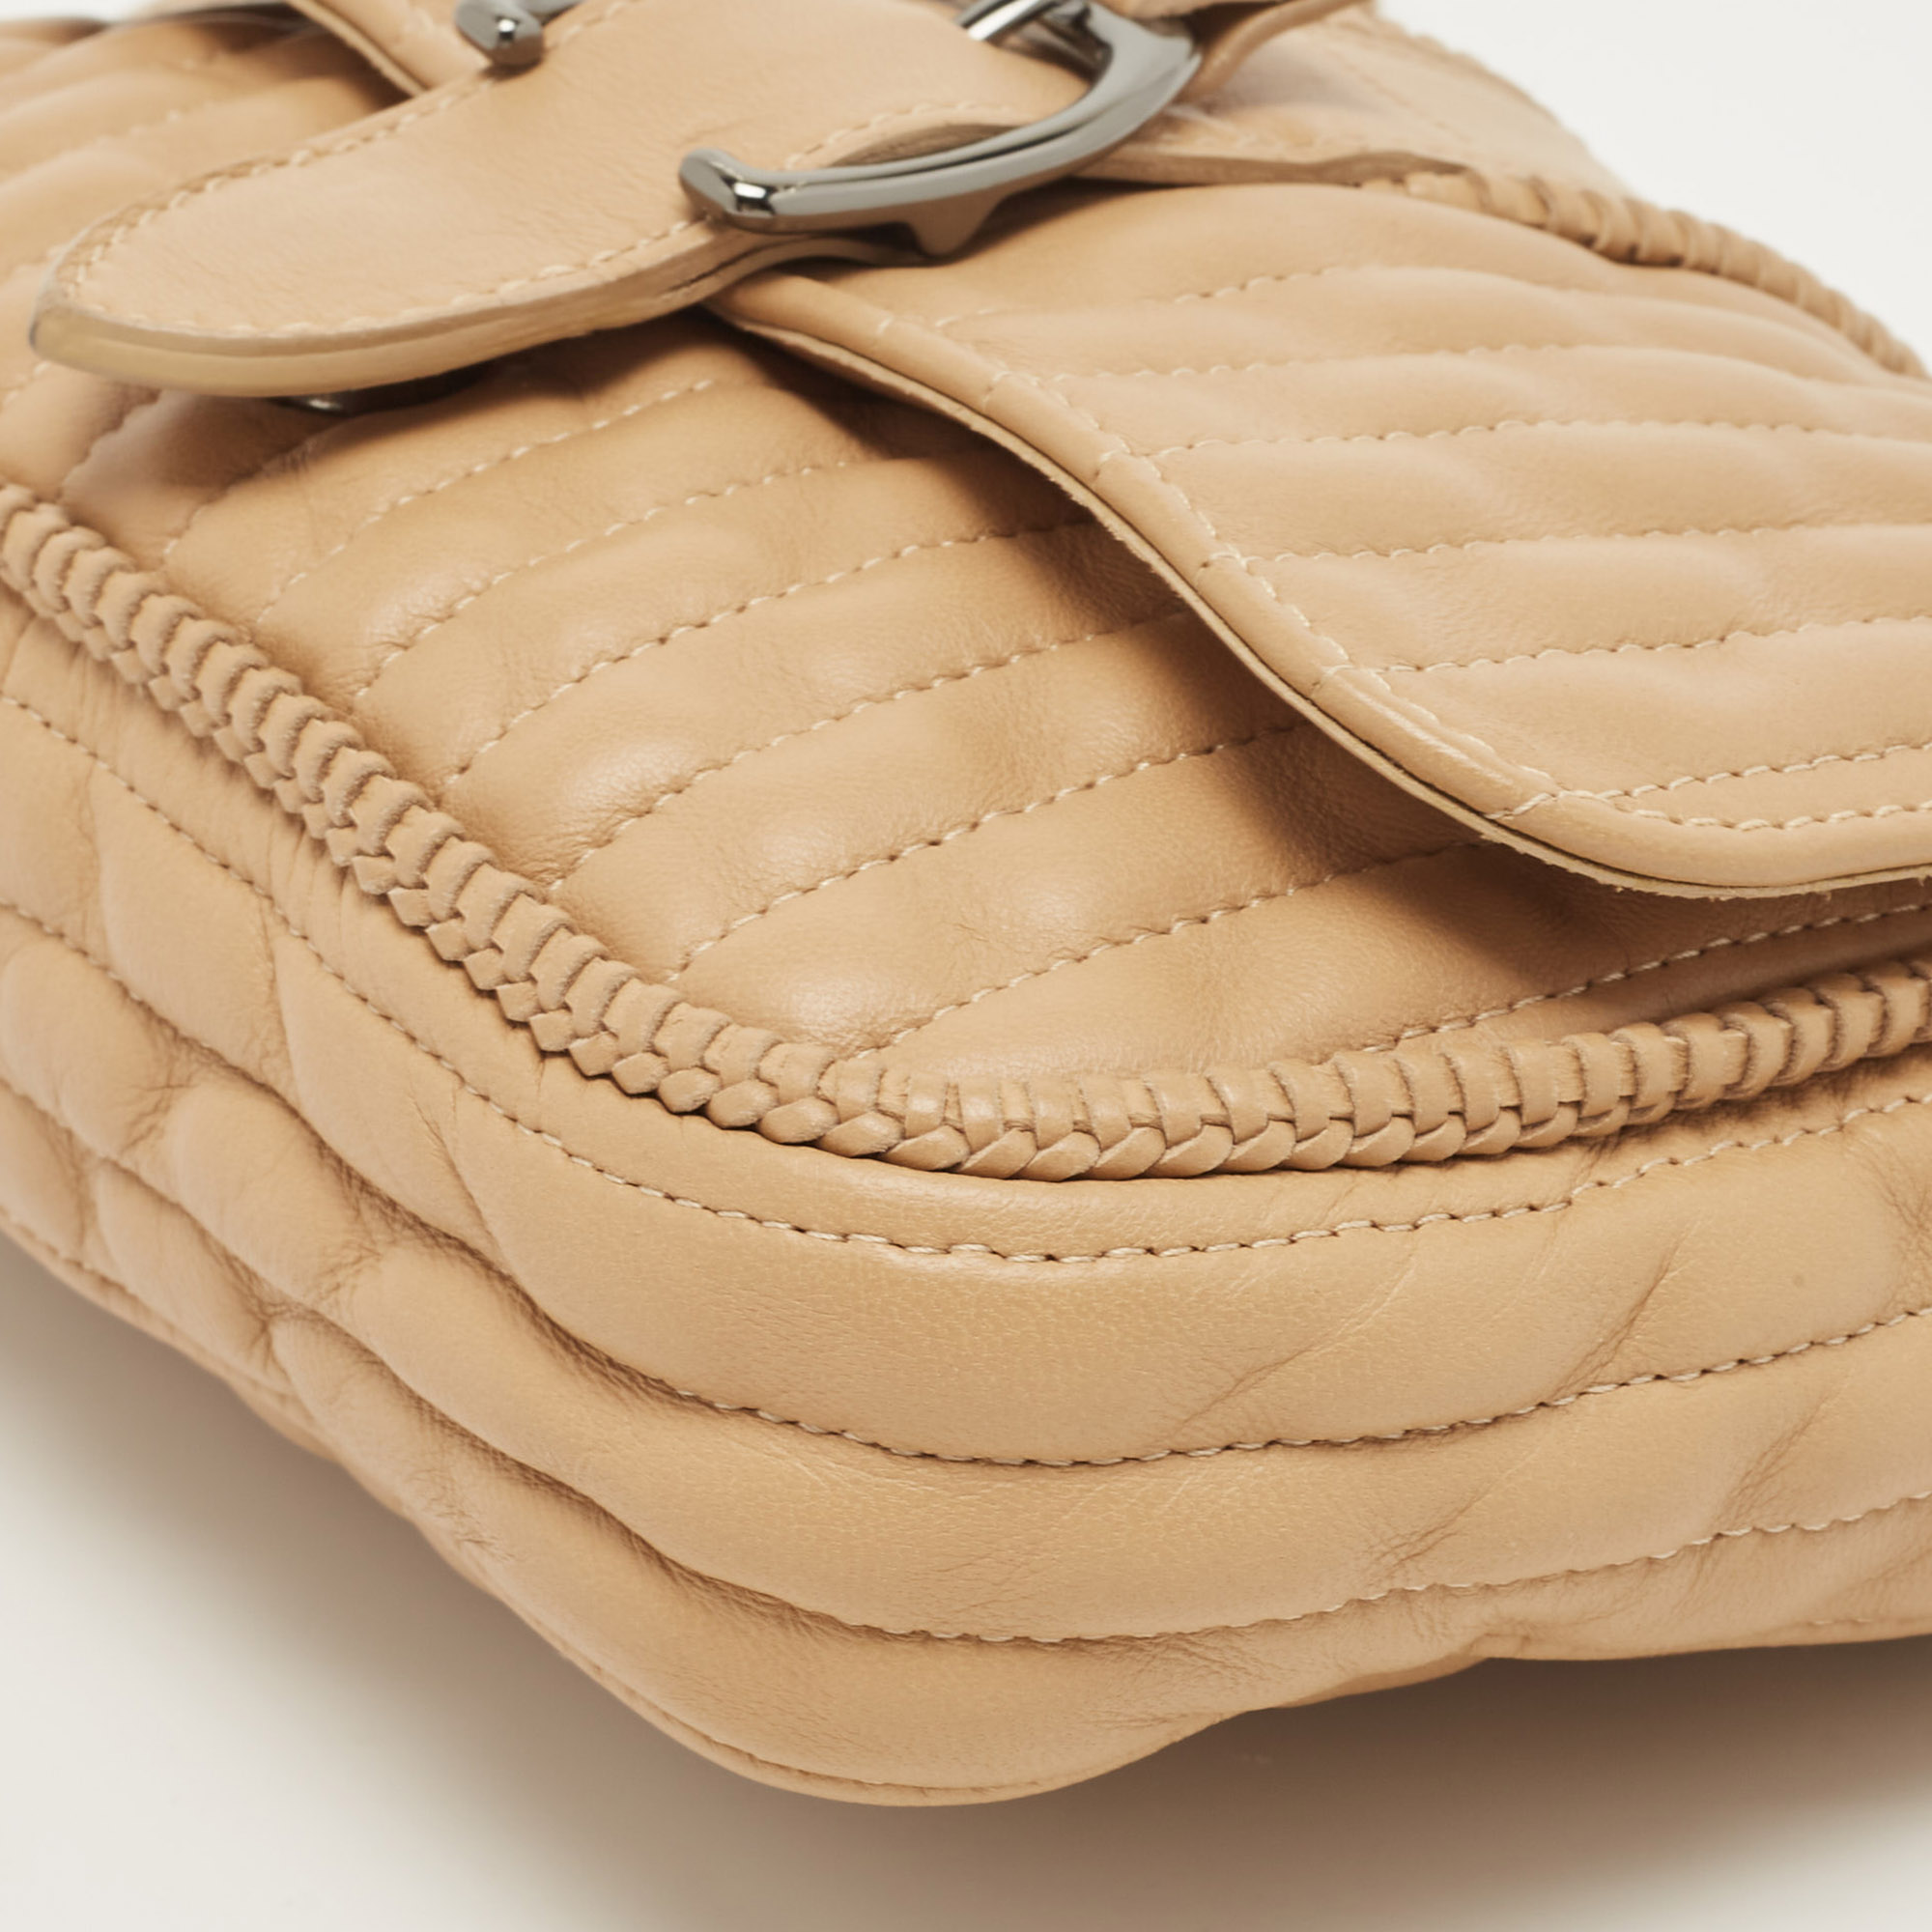 Longchamp Beige Leather Flap Crossbody Bag